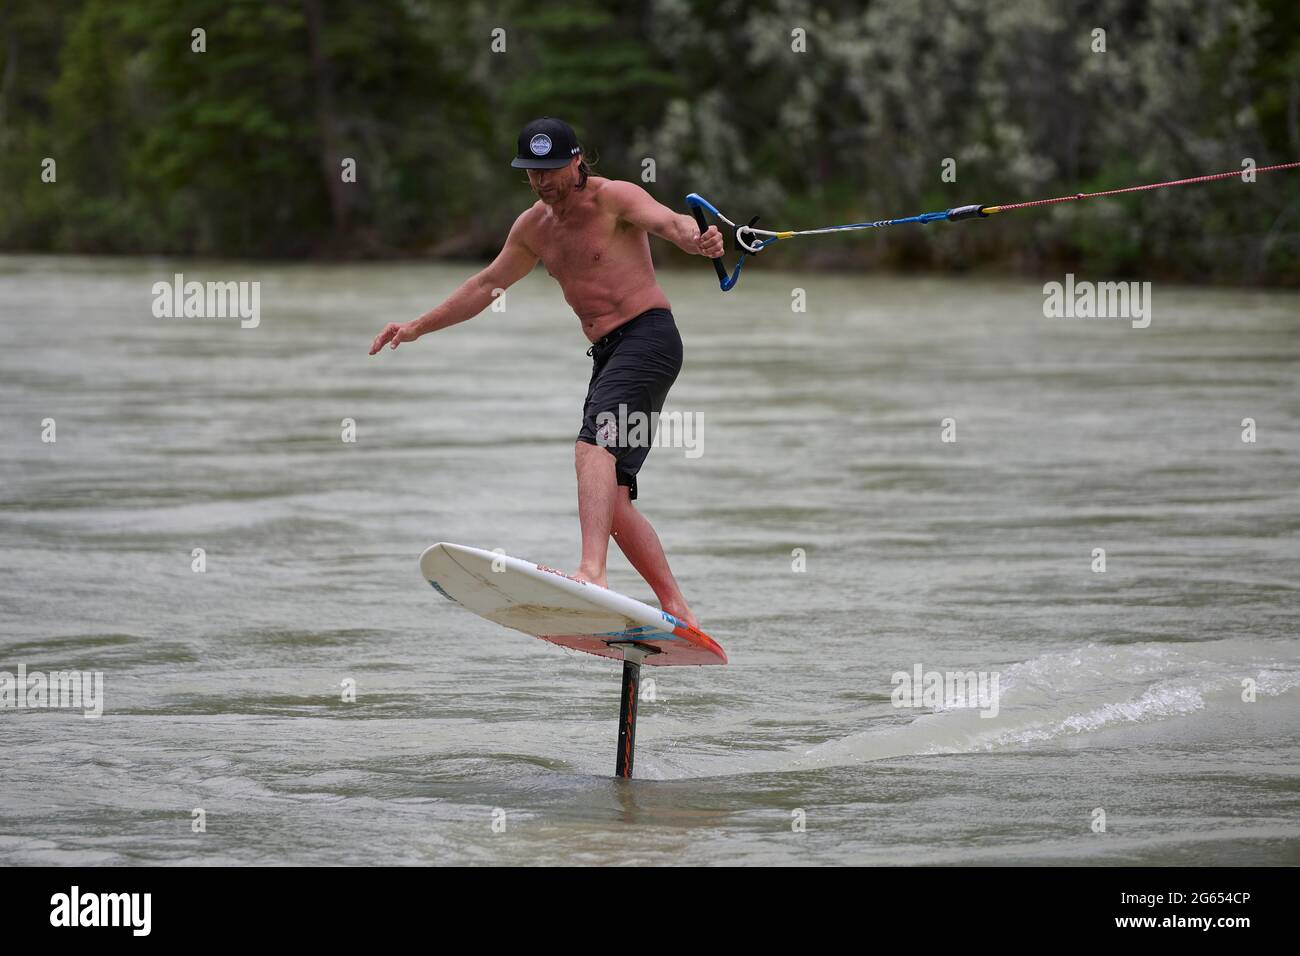 Todd Ril-Surfen (Foil Boarding) während des Flußes im Frühling im Bow River, Canmore, Alberta, Kanada. Stockfoto